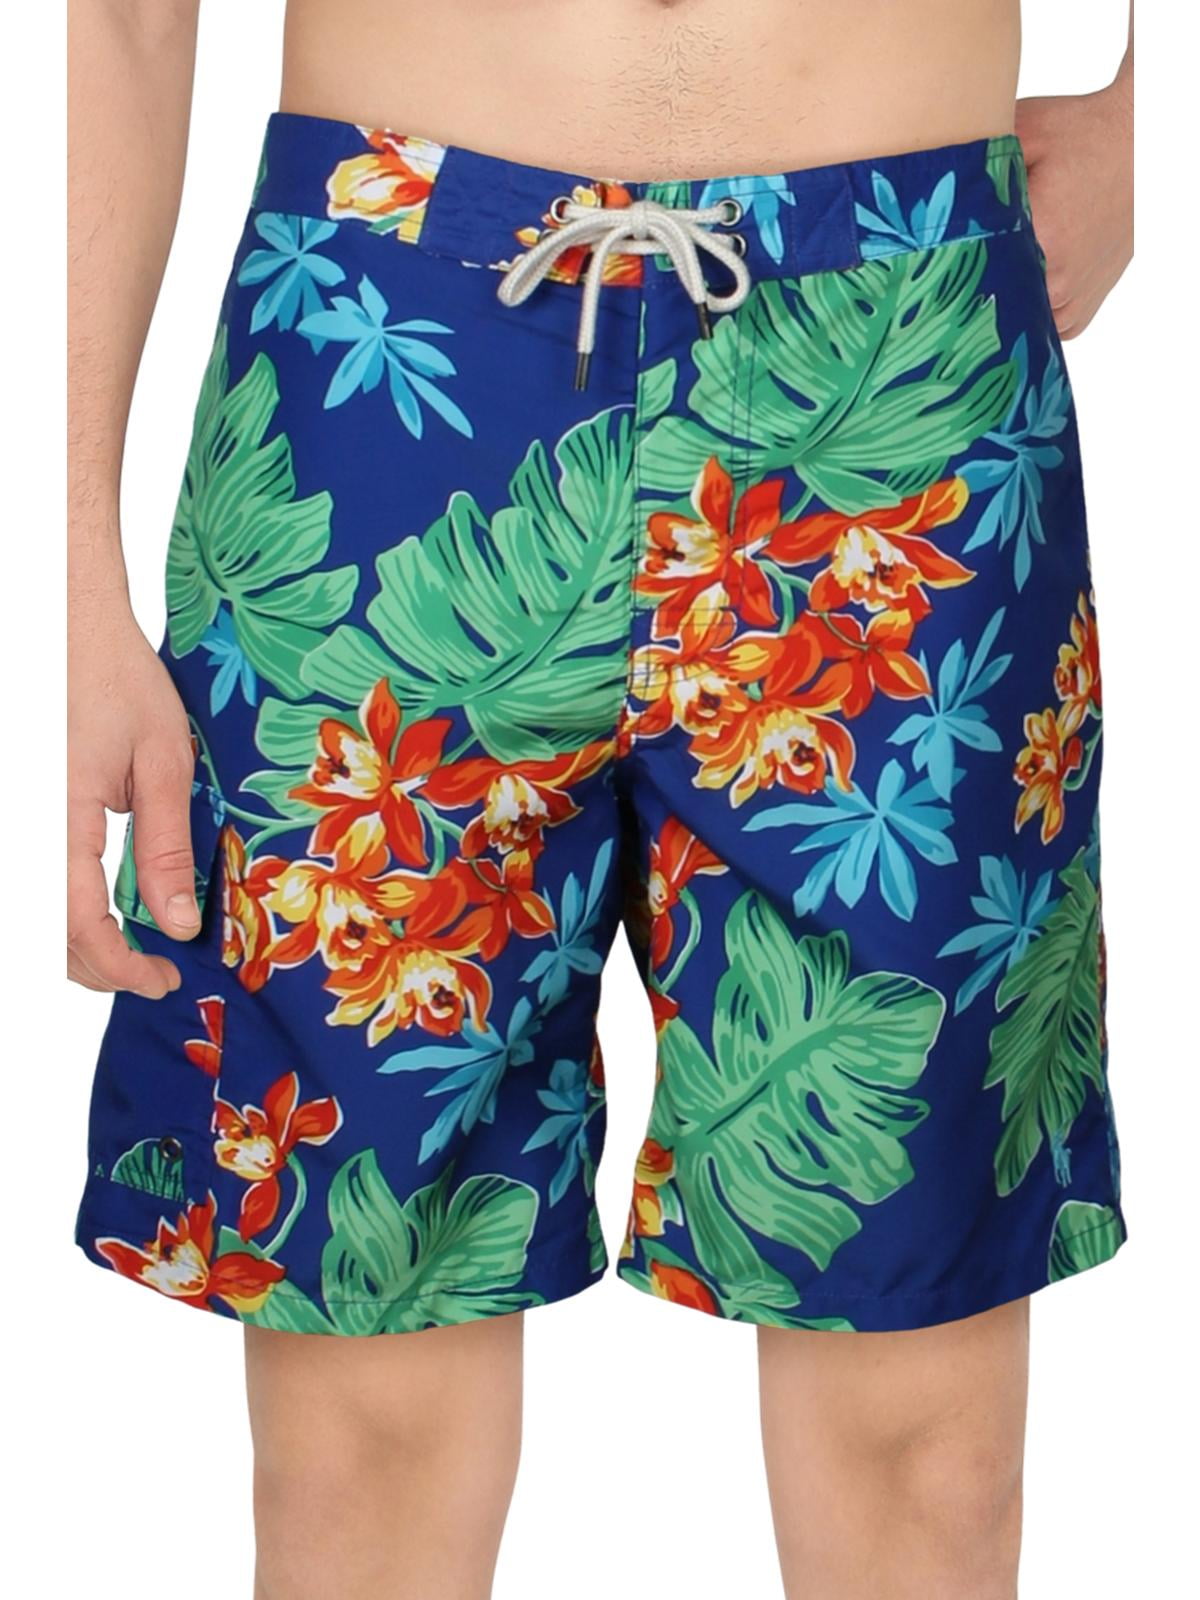 Meditative mythology Misuse Polo Ralph Lauren Mens Kailua Board Shorts 8" Inseam Swim Trunks Blue S -  Walmart.com